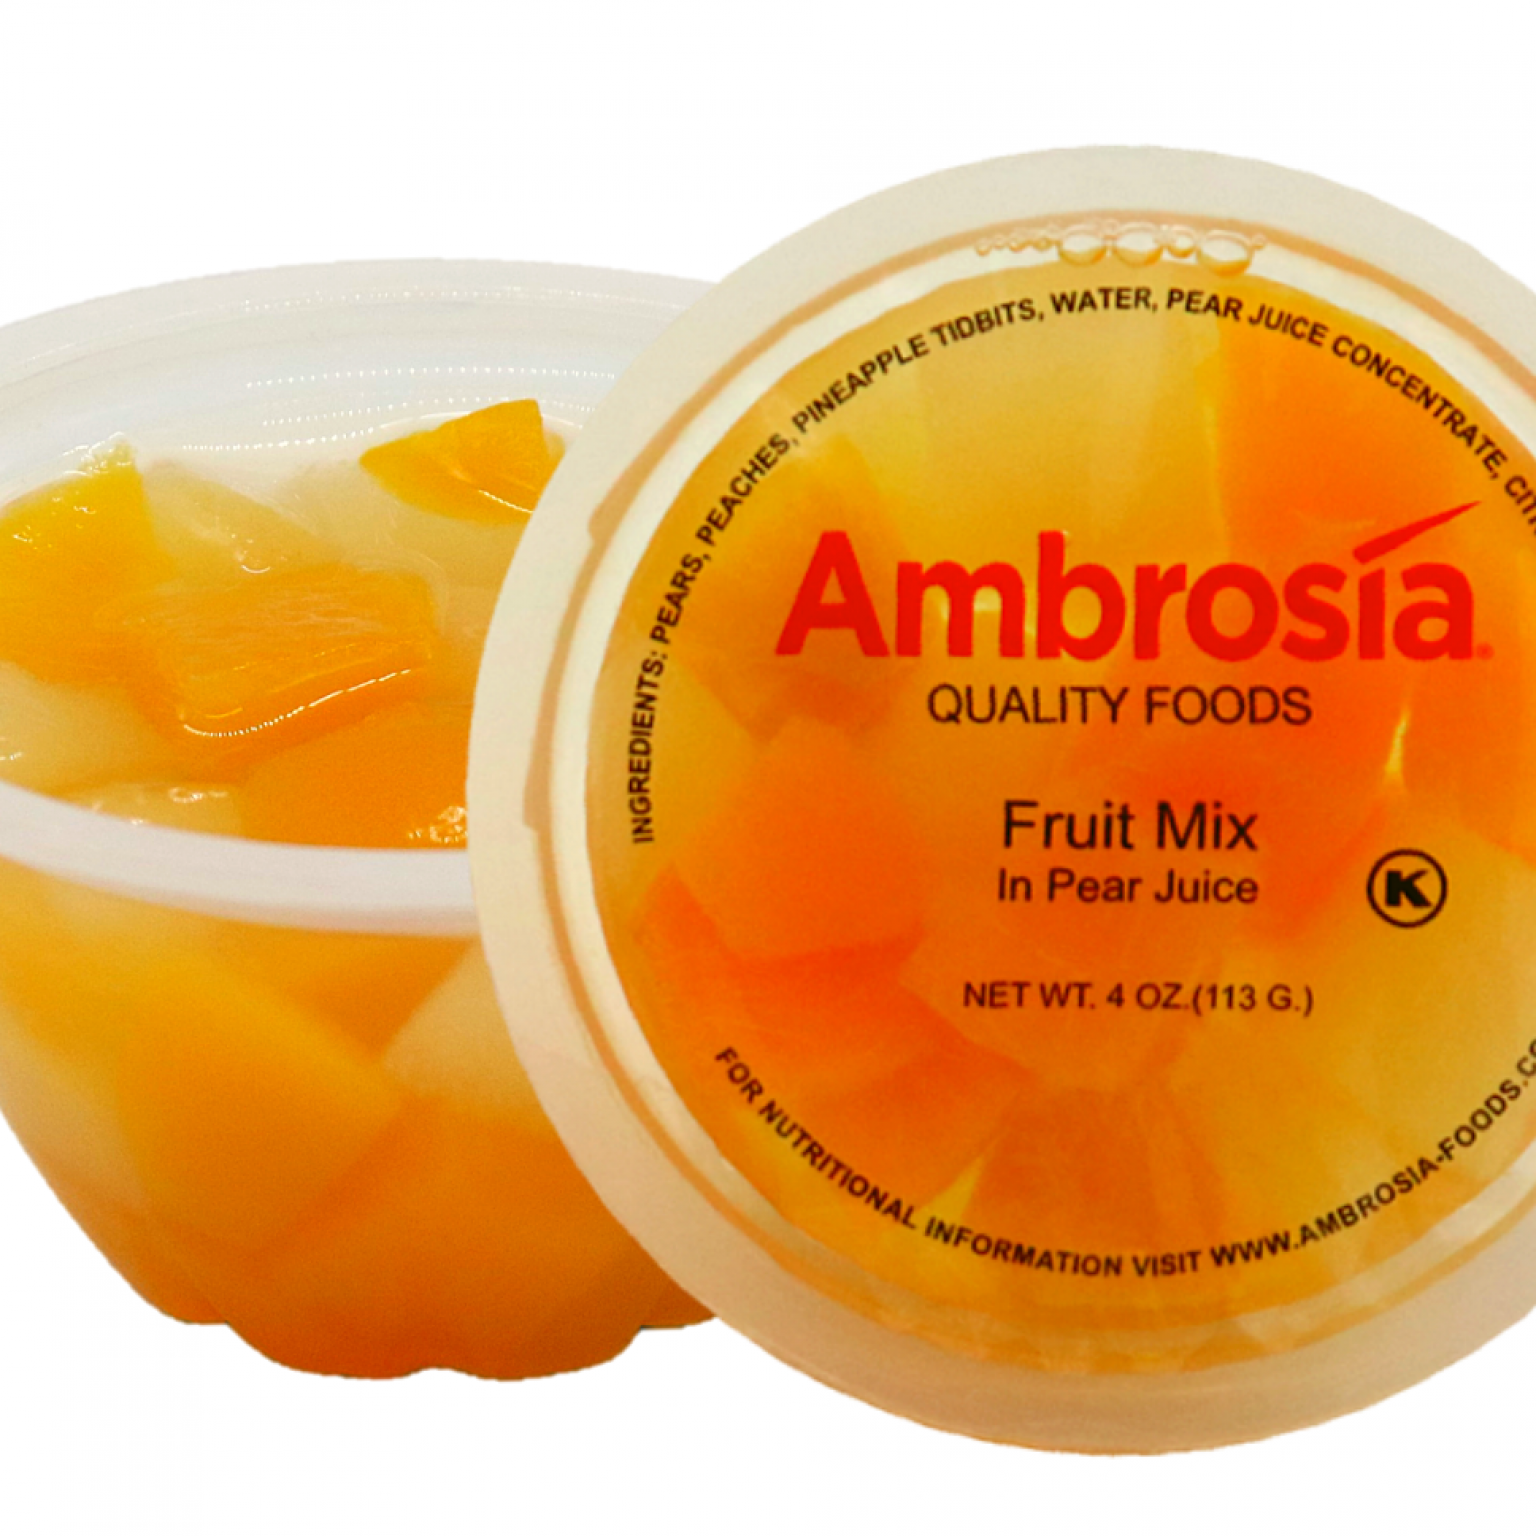 ambrosia-fruit-mix-ginsberg-s-foods